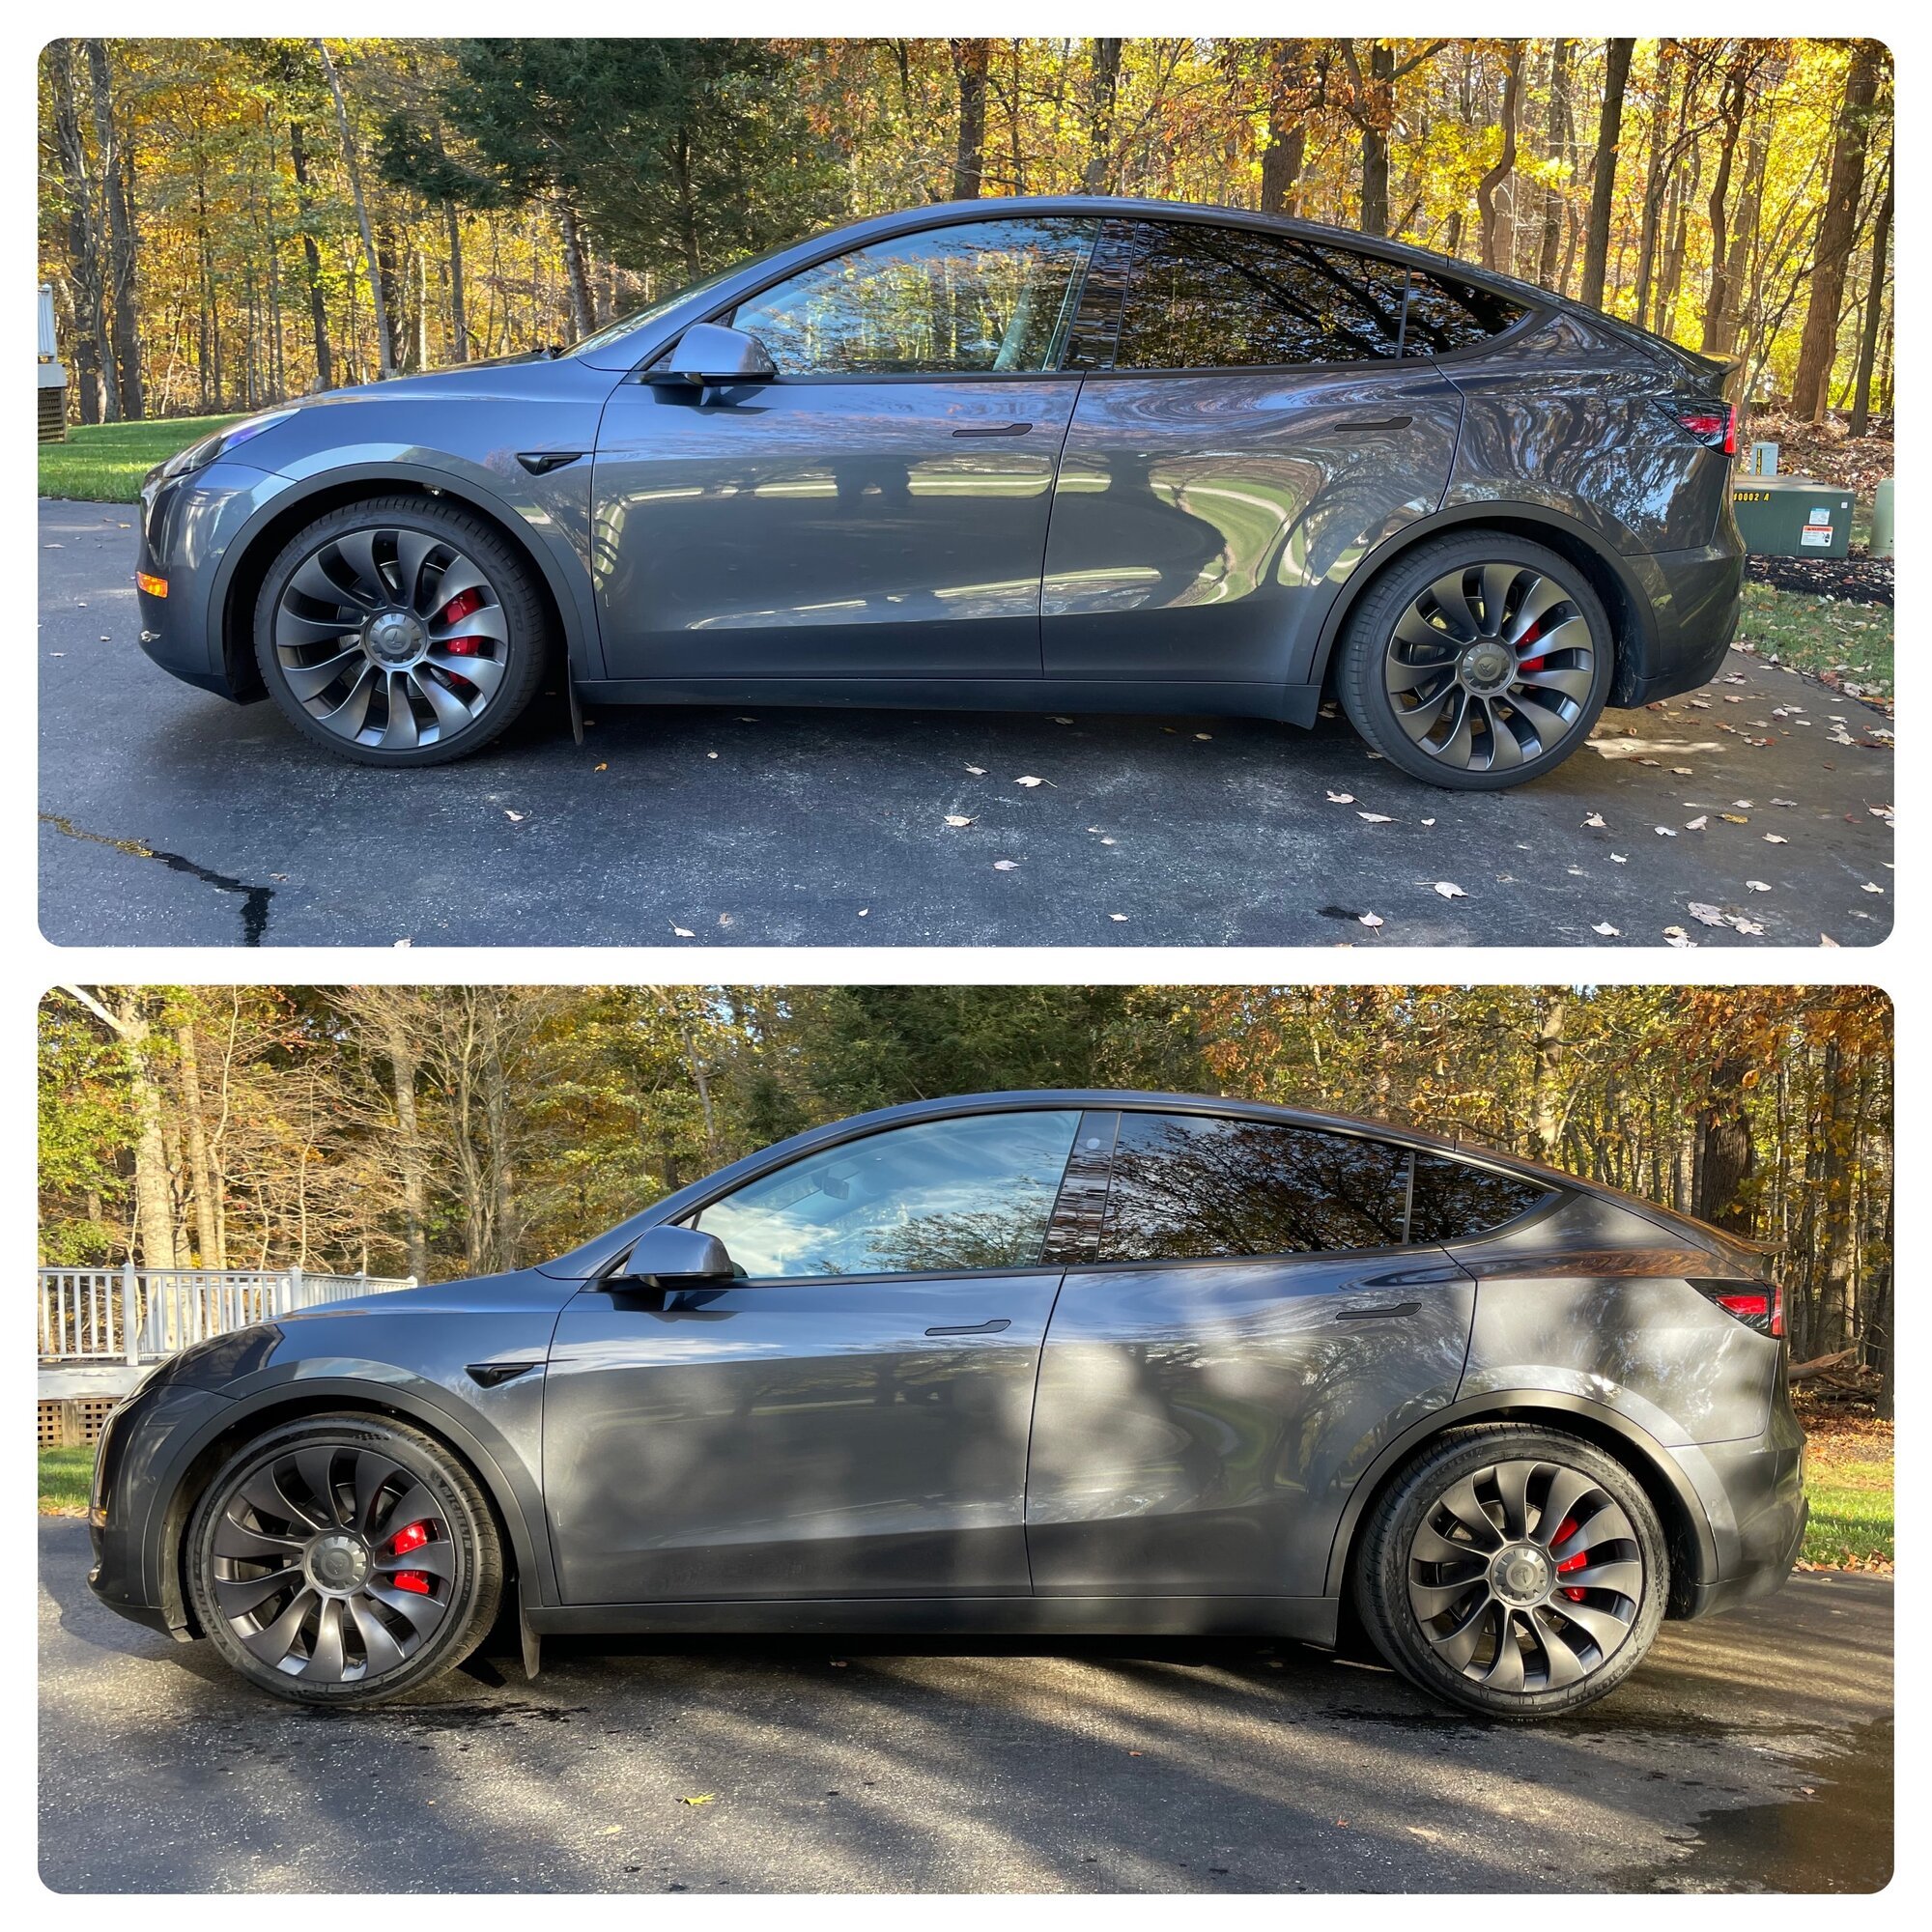 Maximum Tires Size Model Y Performance? Tesla Motors Club